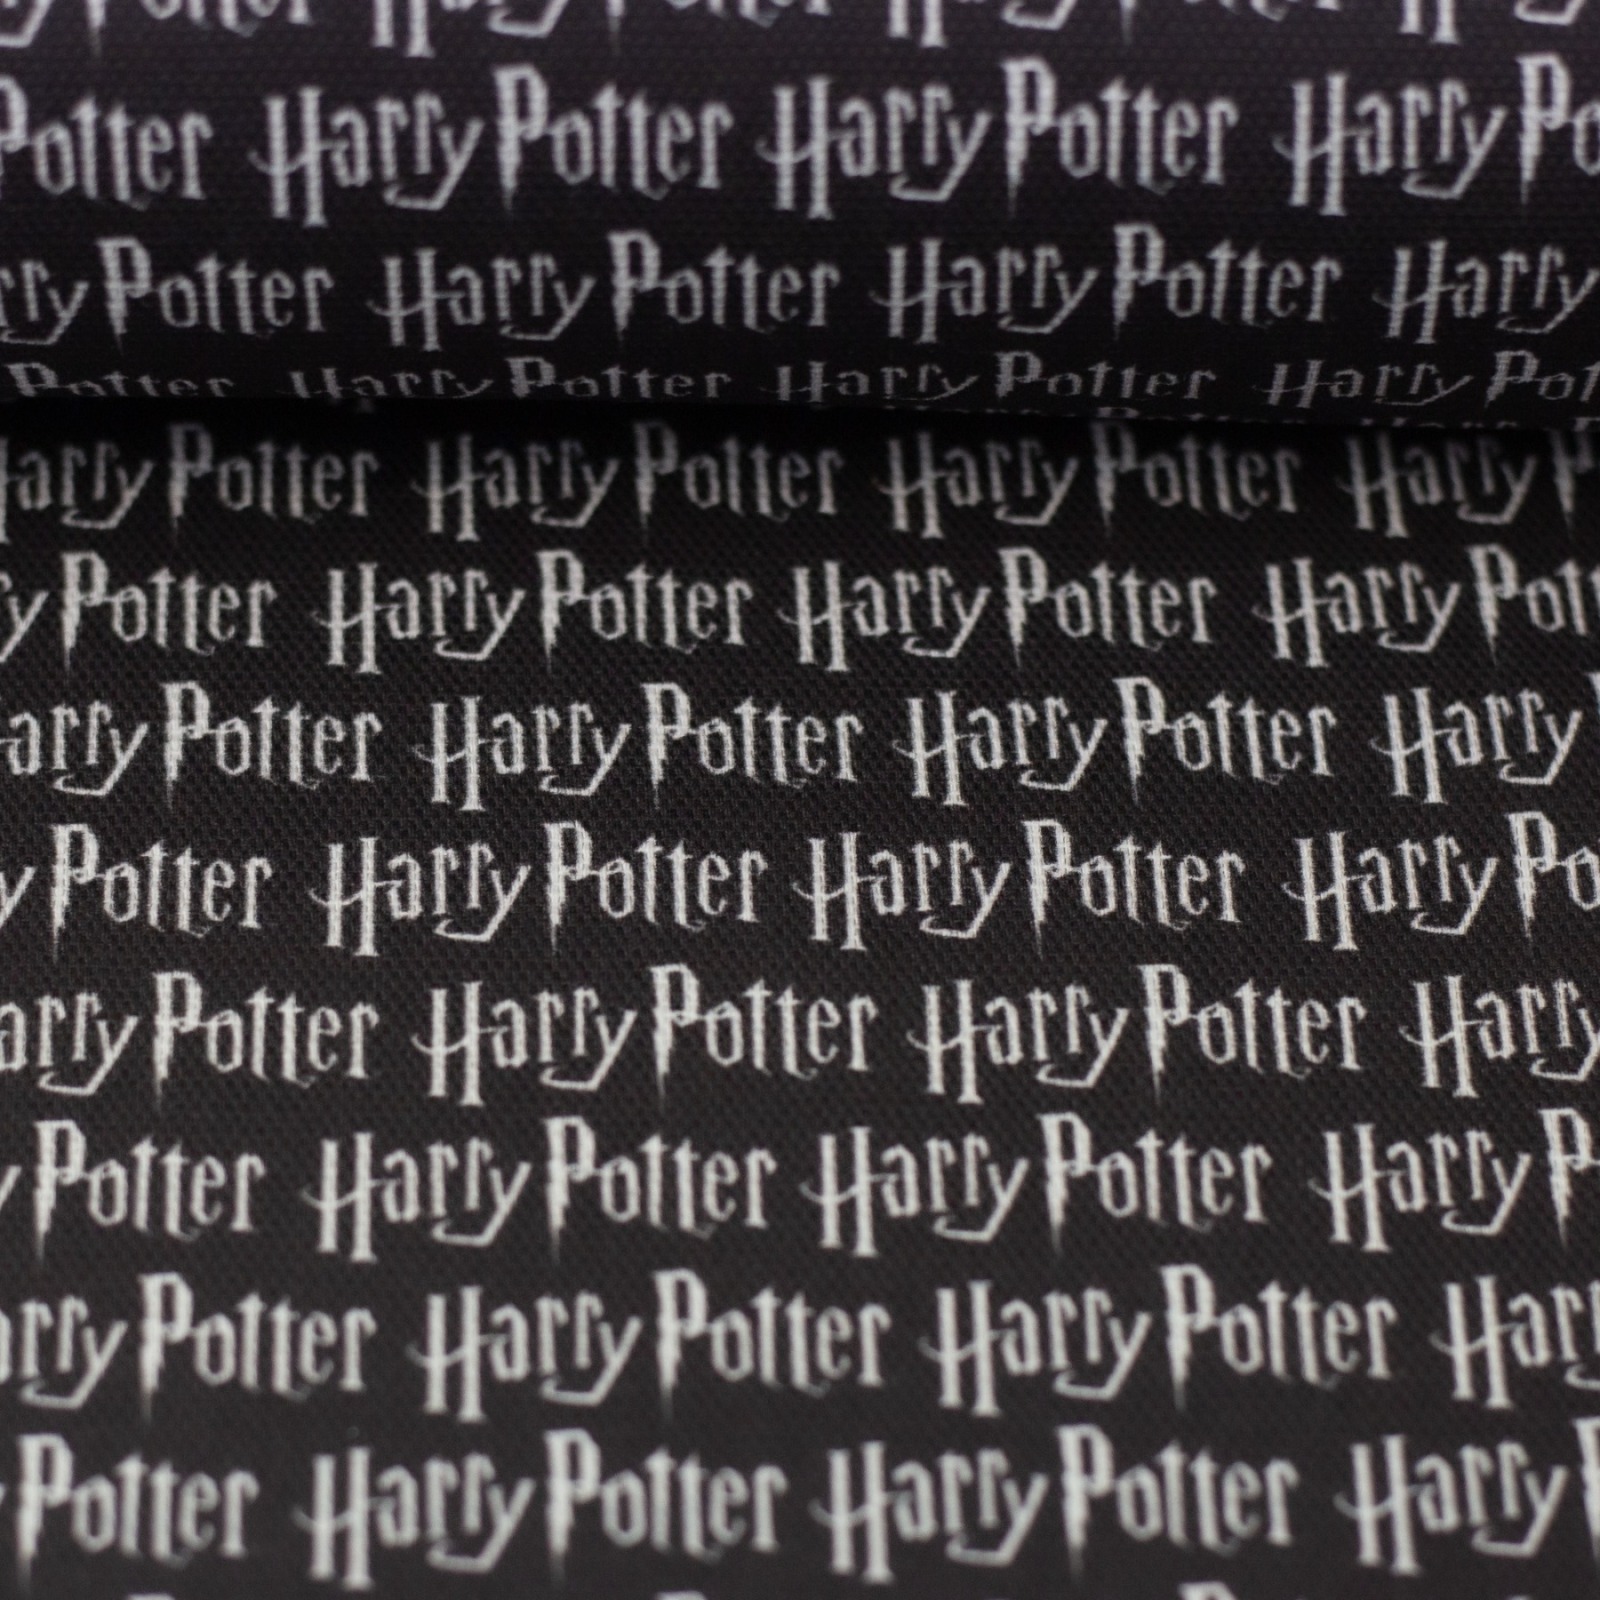 0,5m Canvas Harry Potter Lizenz Schriftzug, schwarz weiß